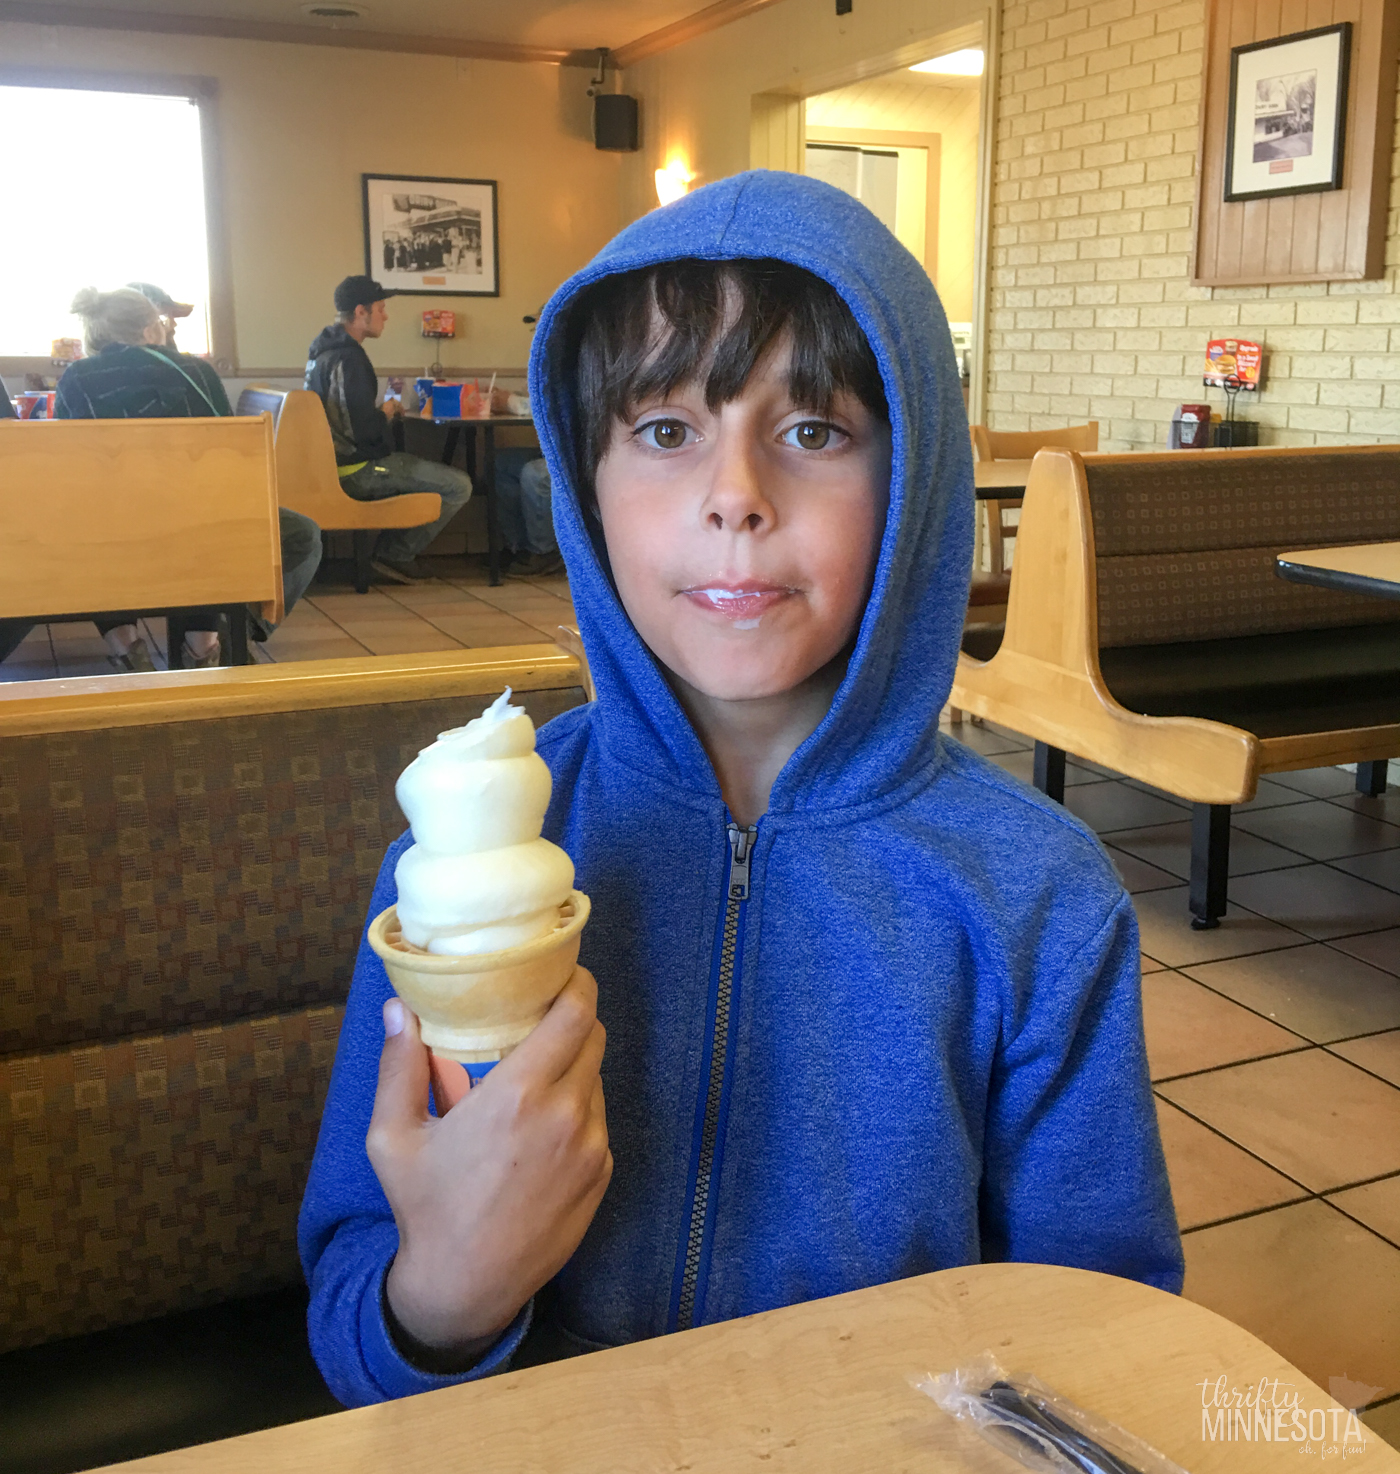 Boy Eating Dairy Queen Ice Cream Cone